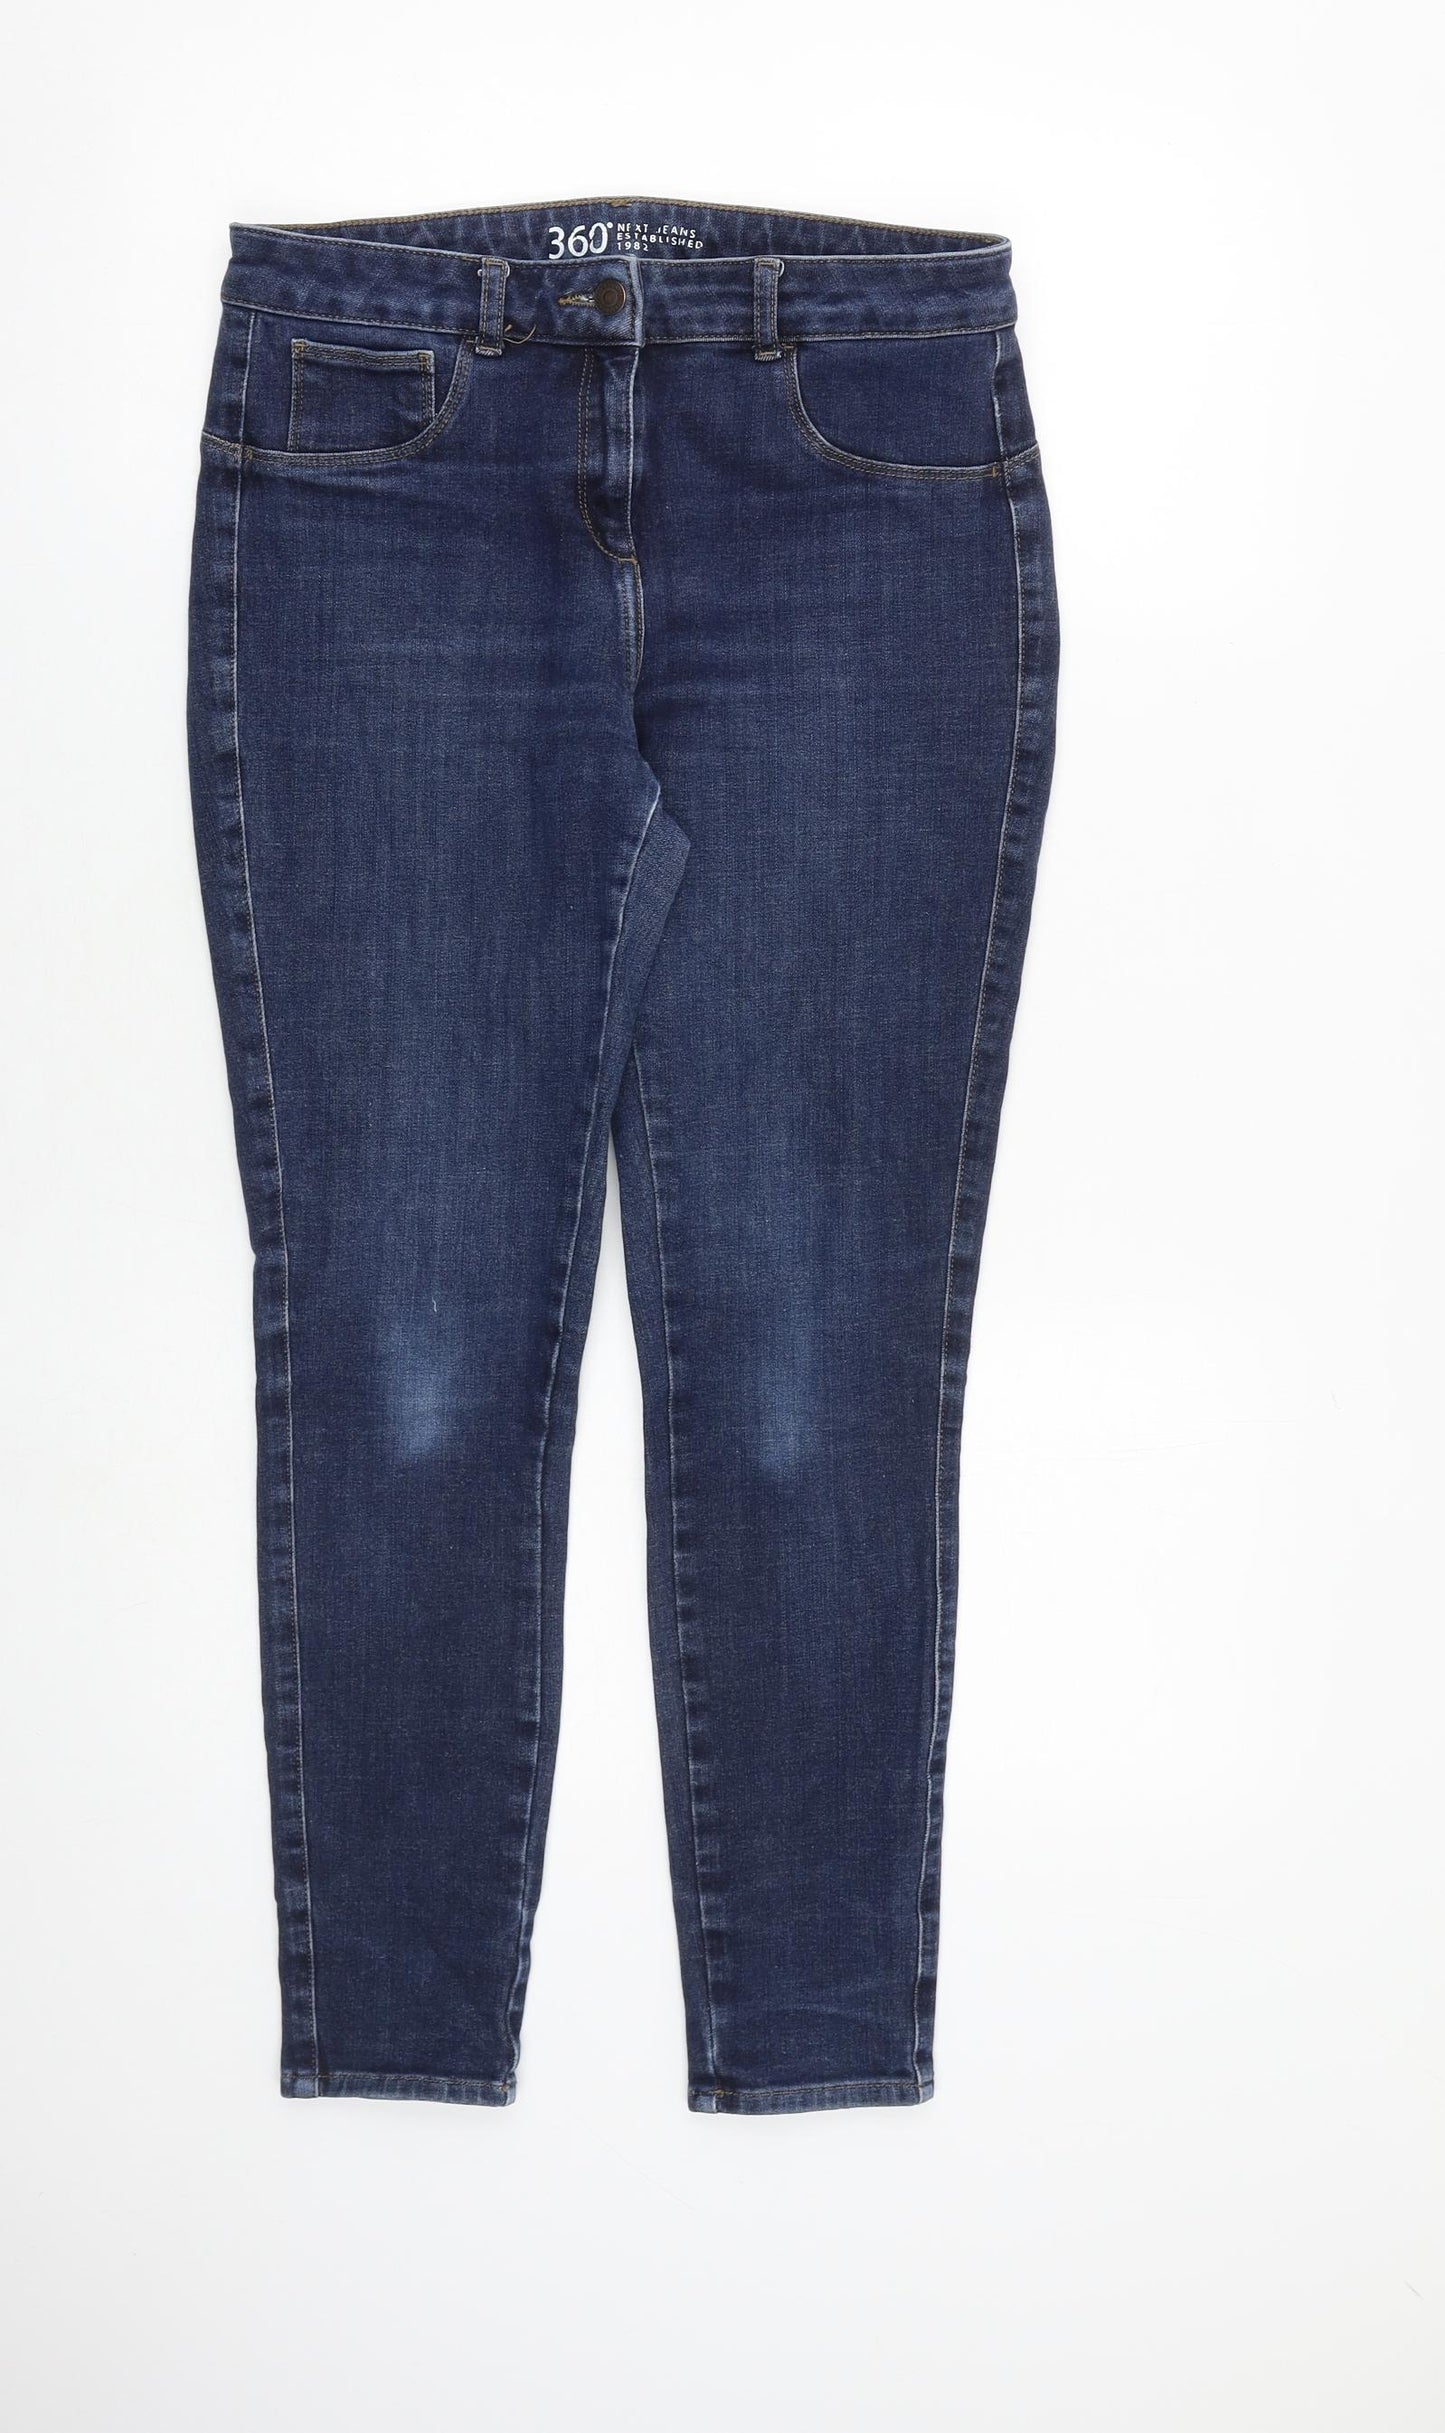 NEXT Womens Blue Cotton Skinny Jeans Size 12 L28 in Slim Zip